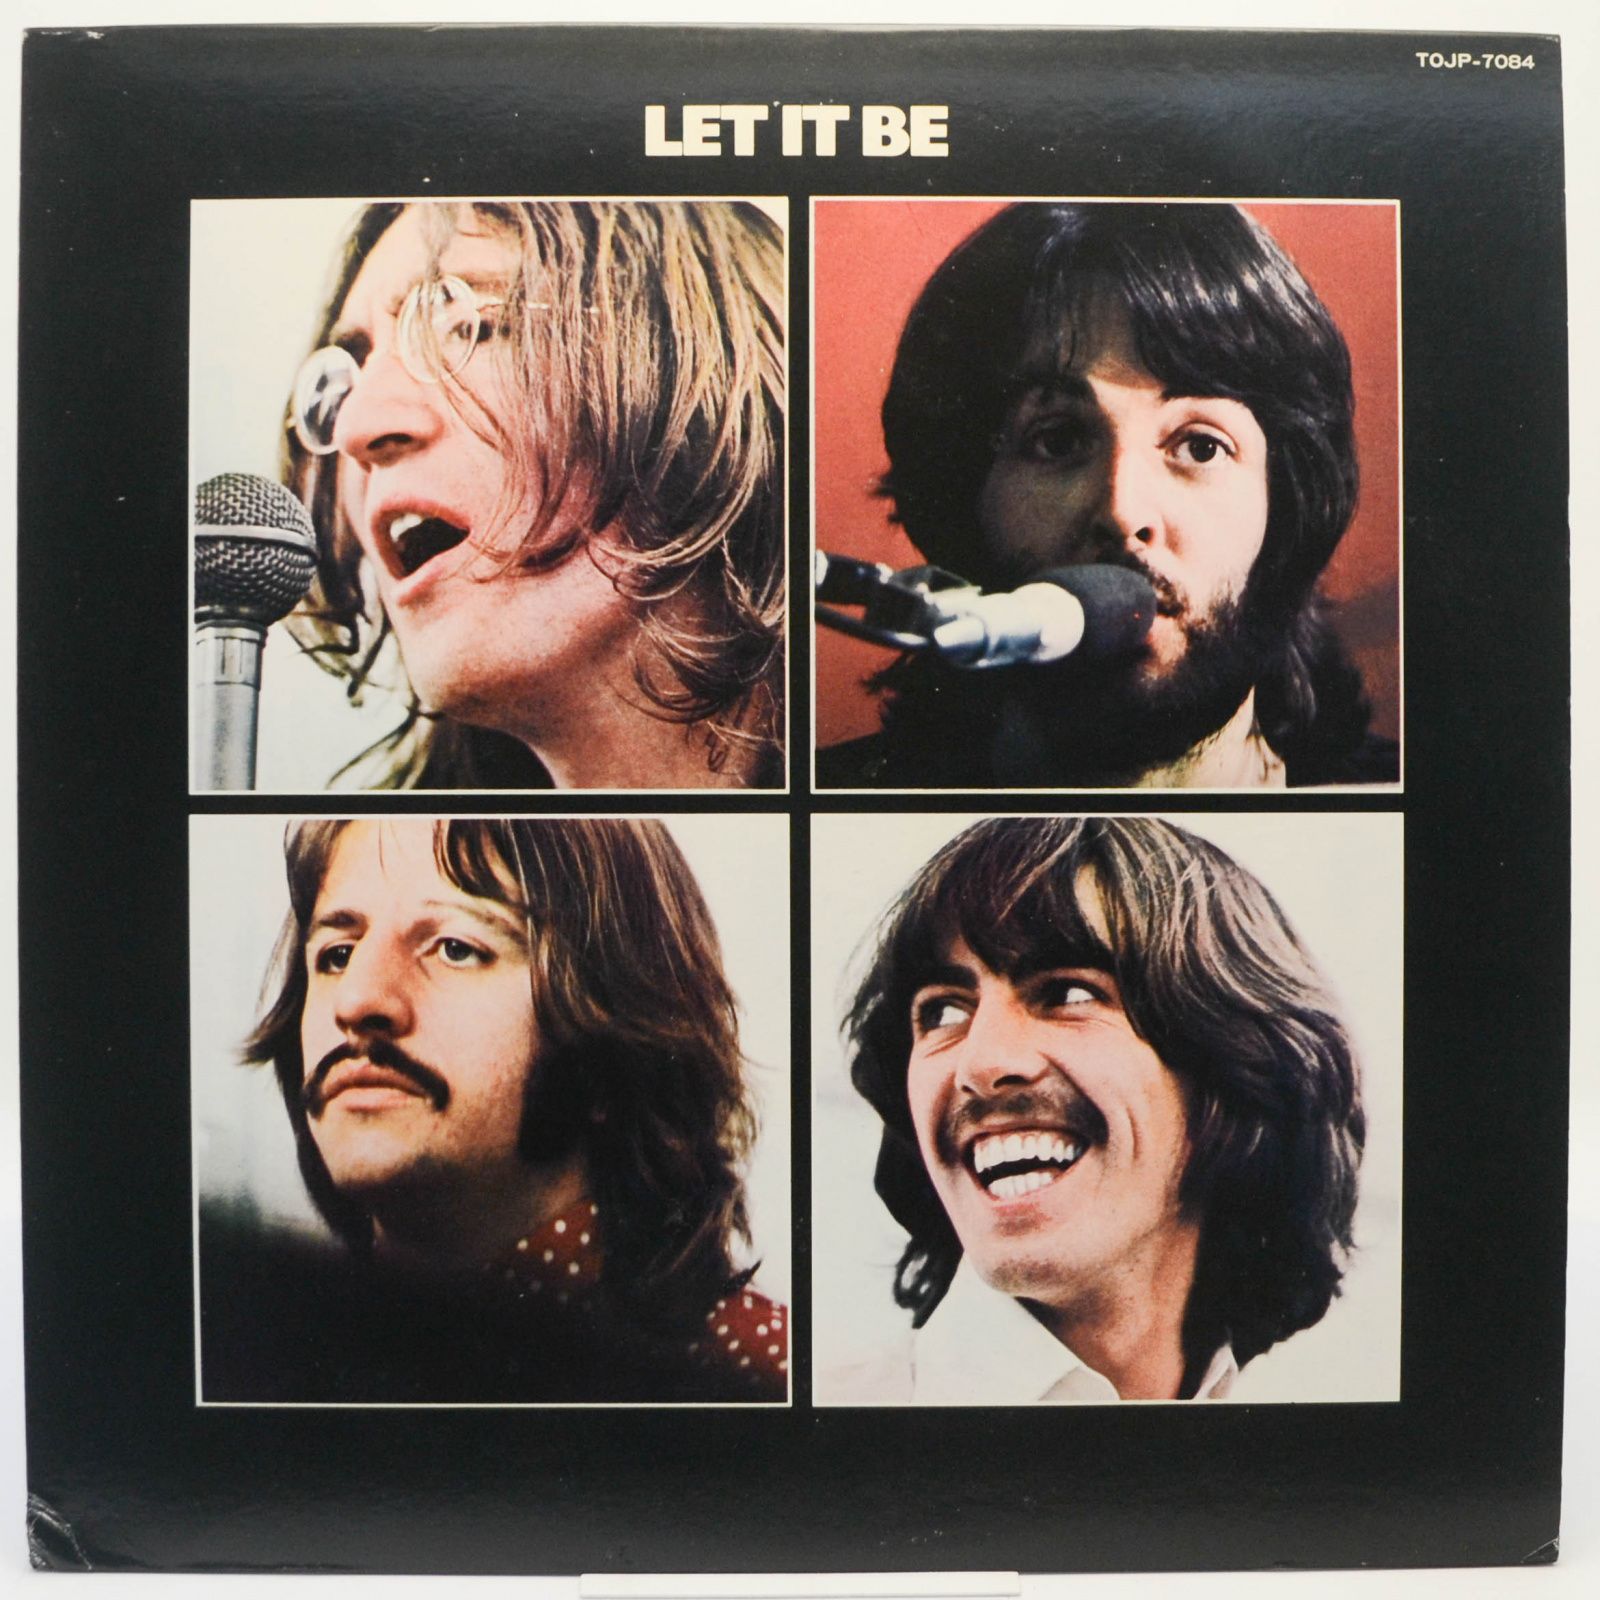 Beatles — Let It Be, 1970